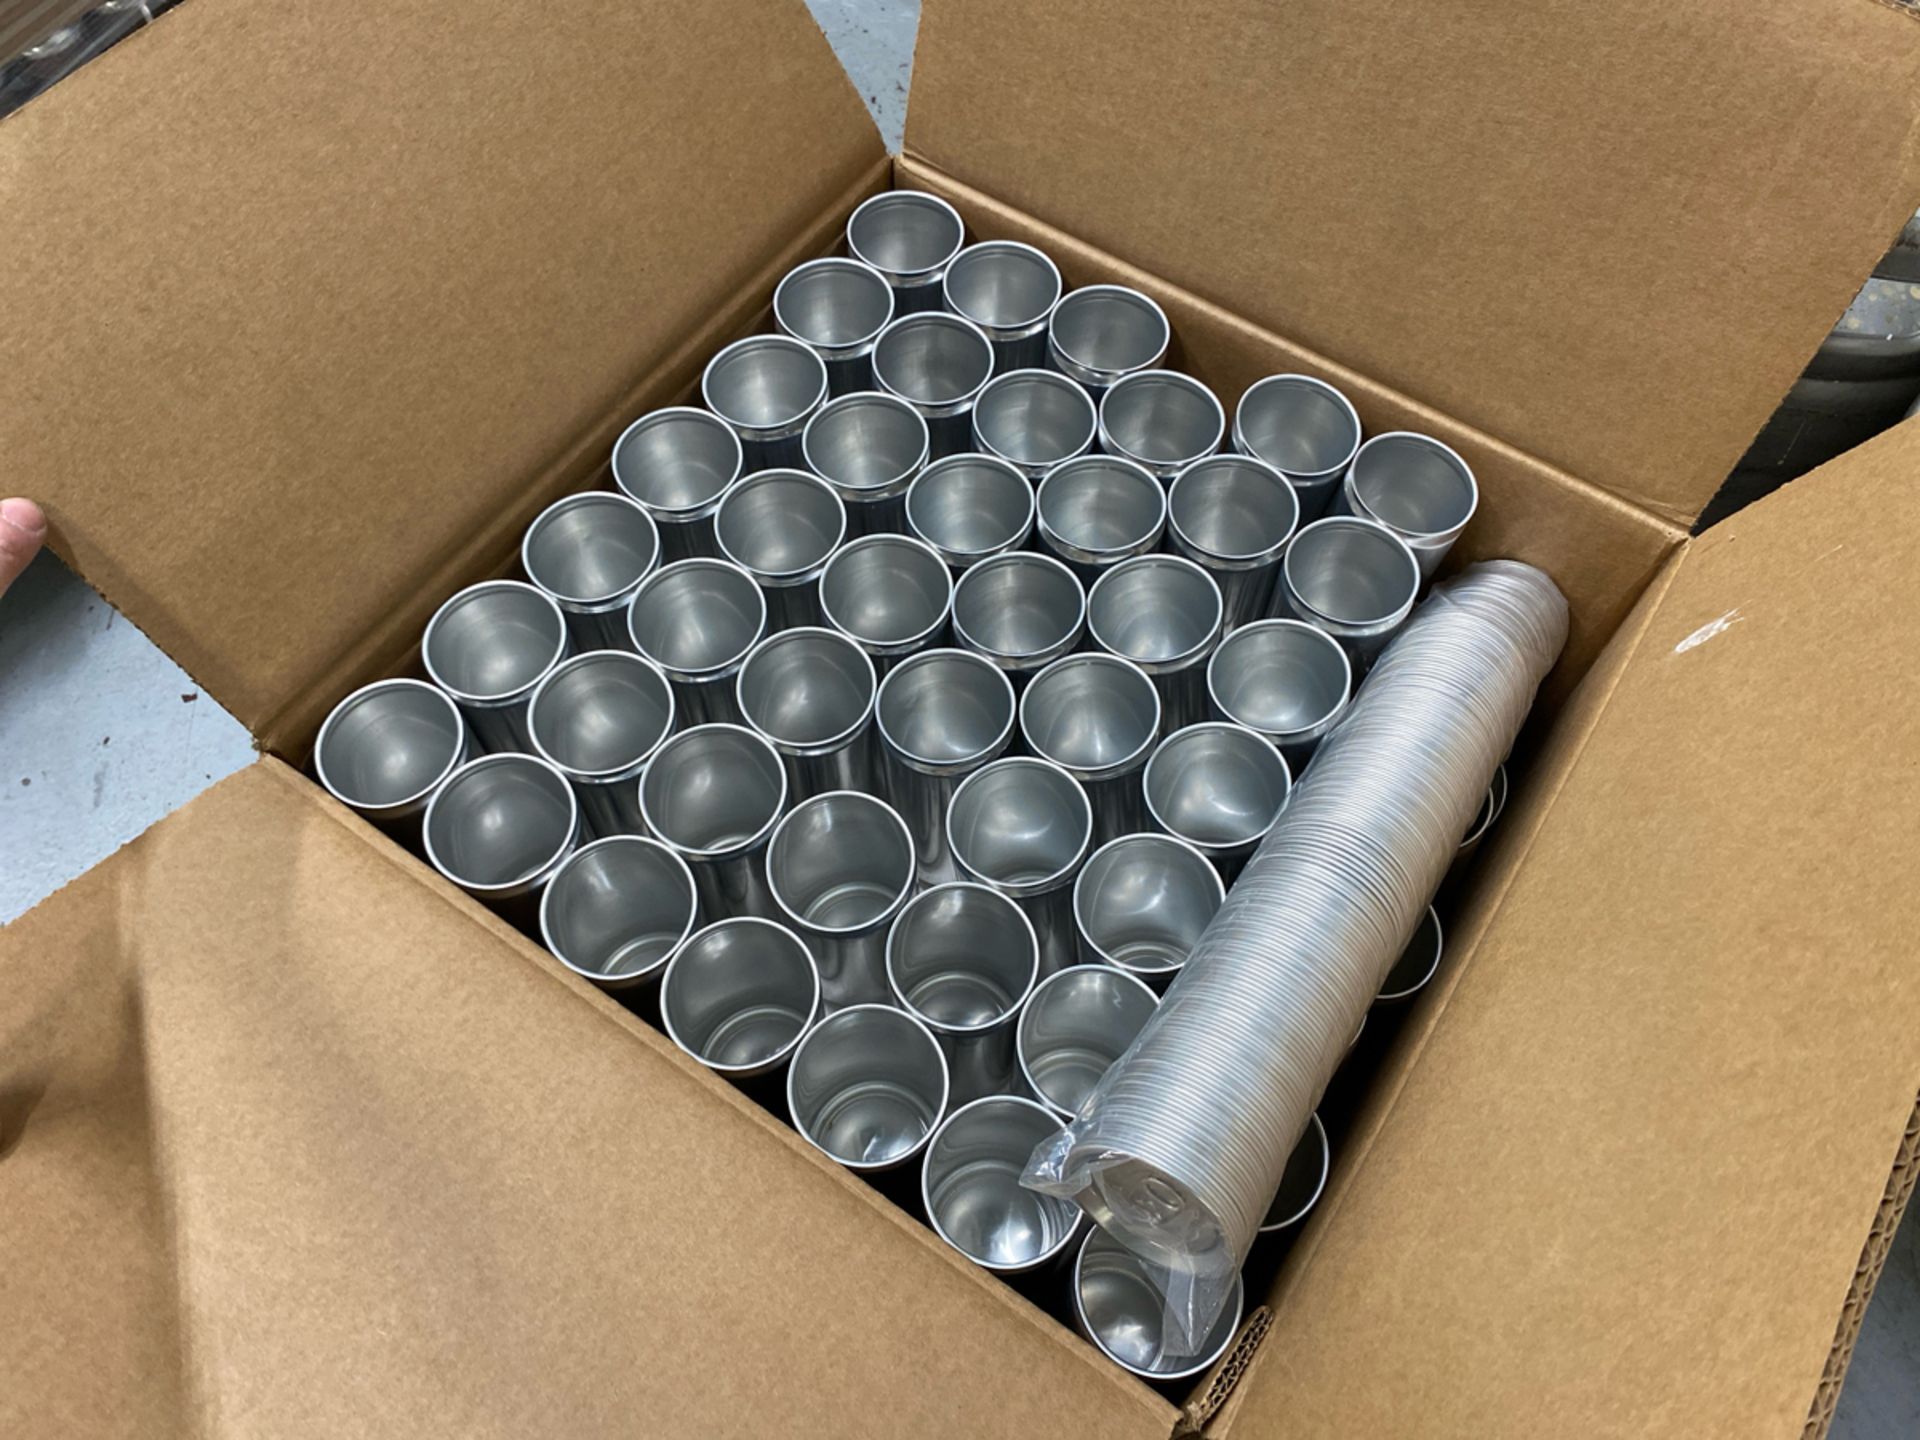 A Case of Oktober 8oz Sleek Aluminum Cans - Image 3 of 3